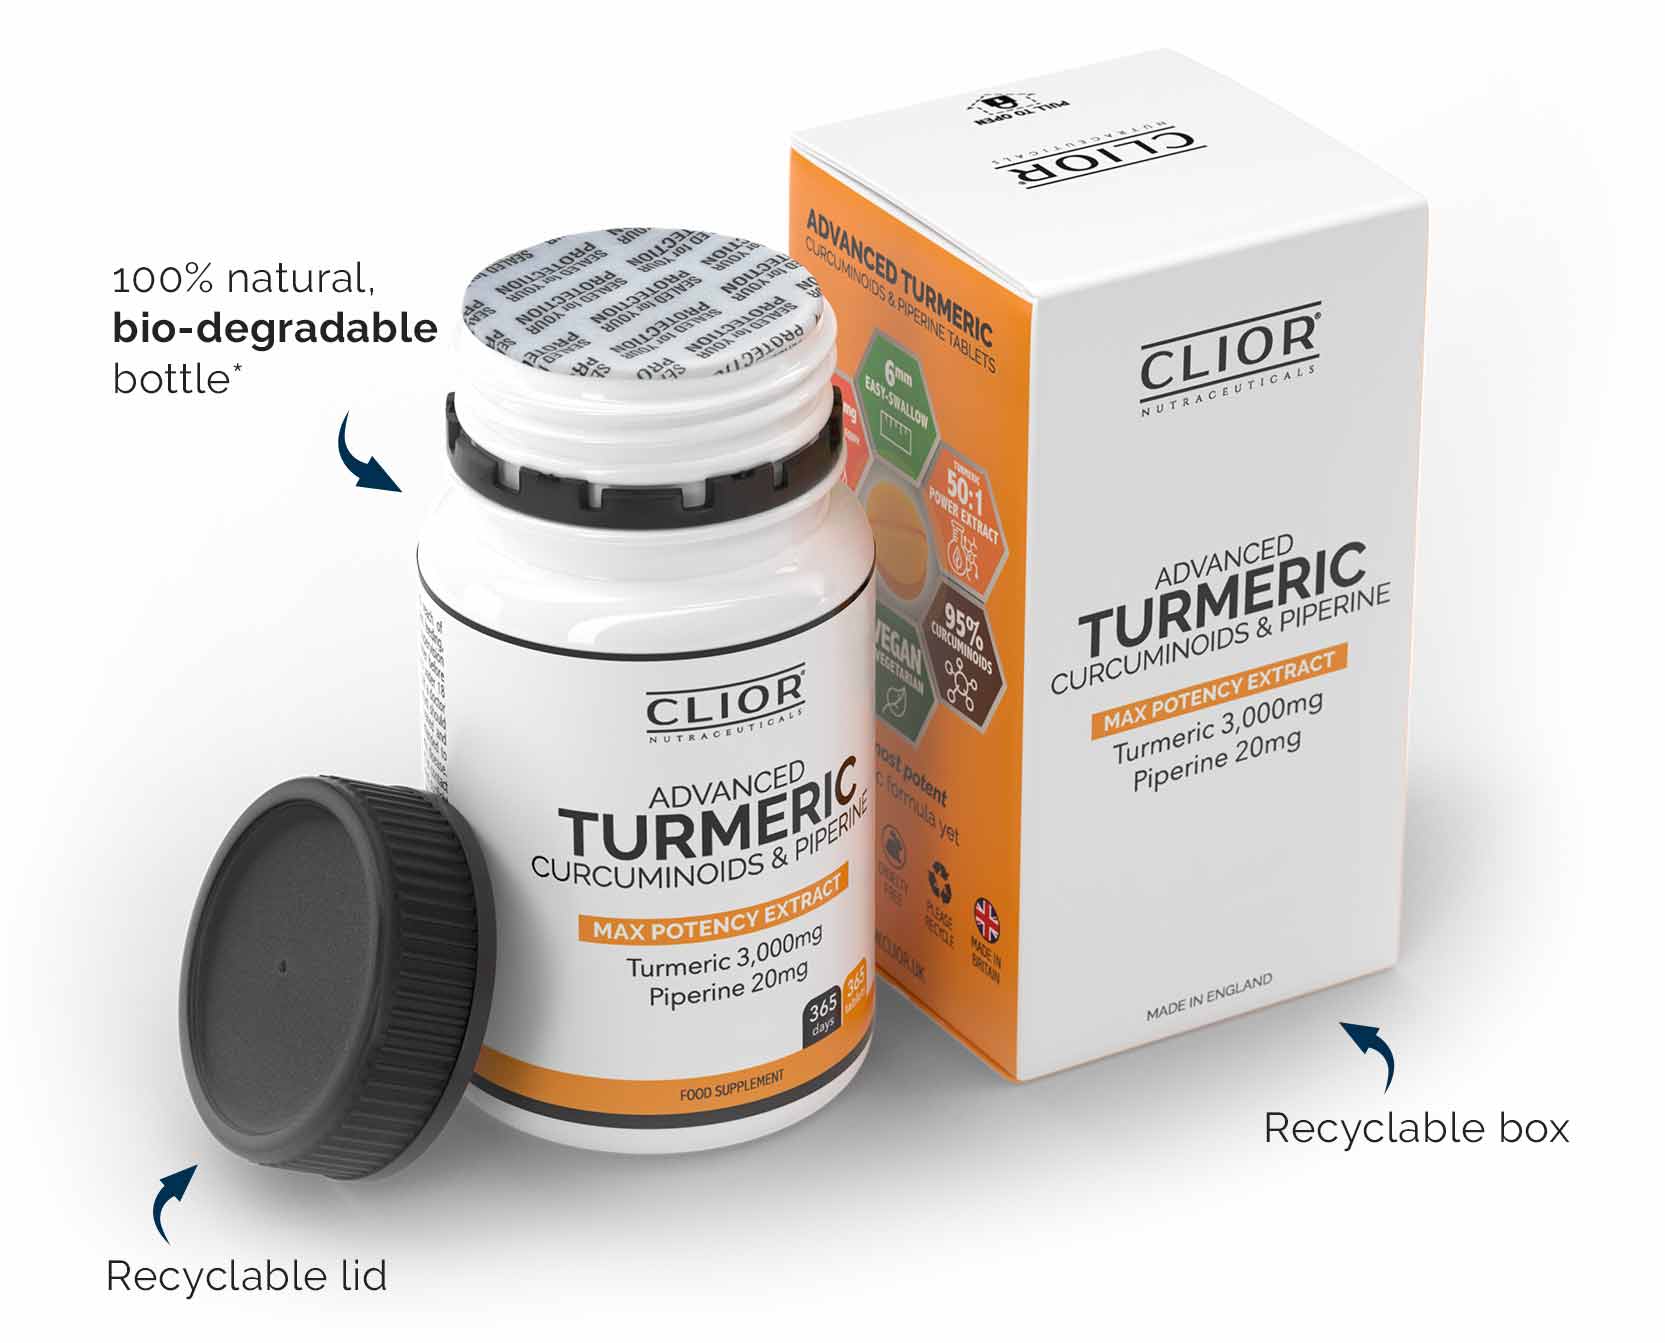 Clior Advanced Turmeric Curcumin & Piperine 3,000mg One Year Supply 365 days